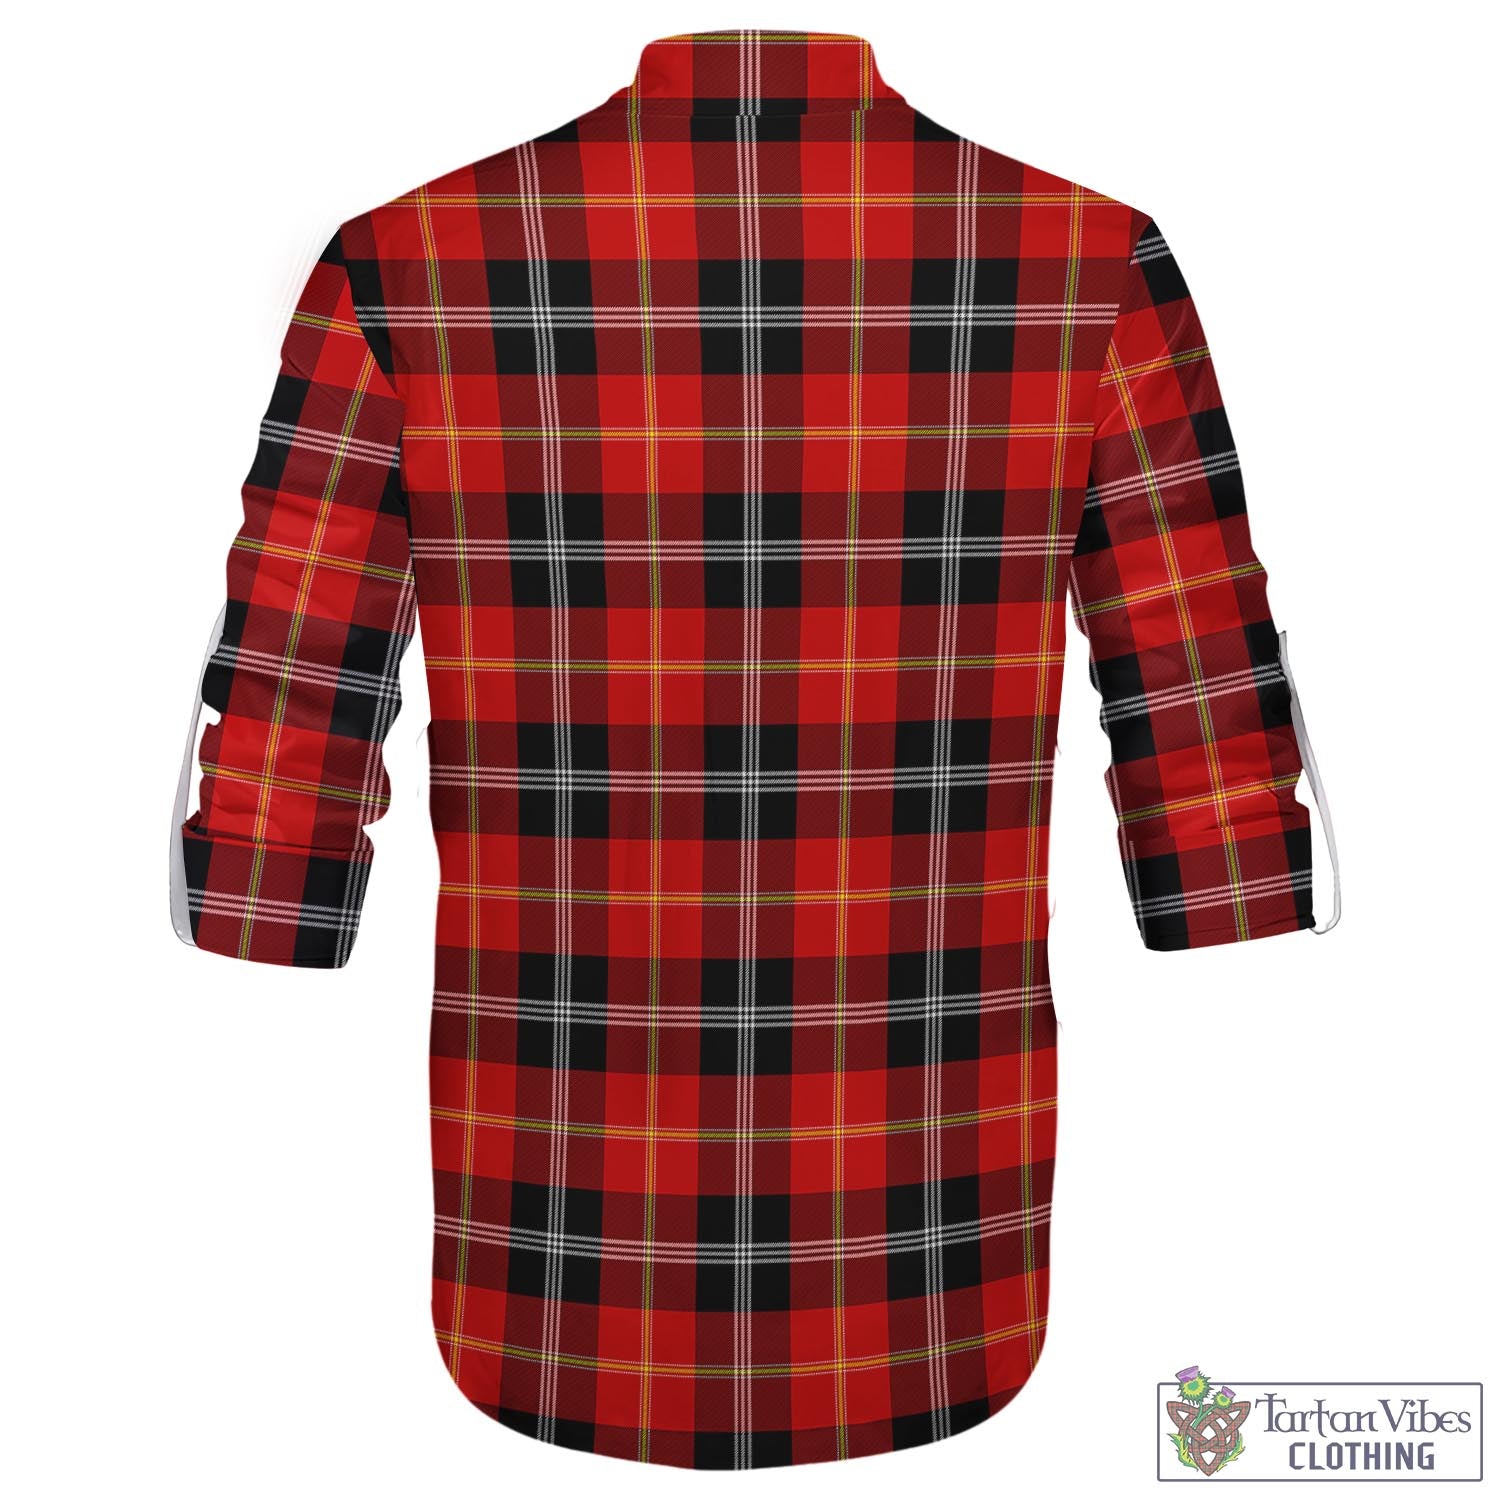 Tartan Vibes Clothing Majoribanks Tartan Men's Scottish Traditional Jacobite Ghillie Kilt Shirt with Family Crest